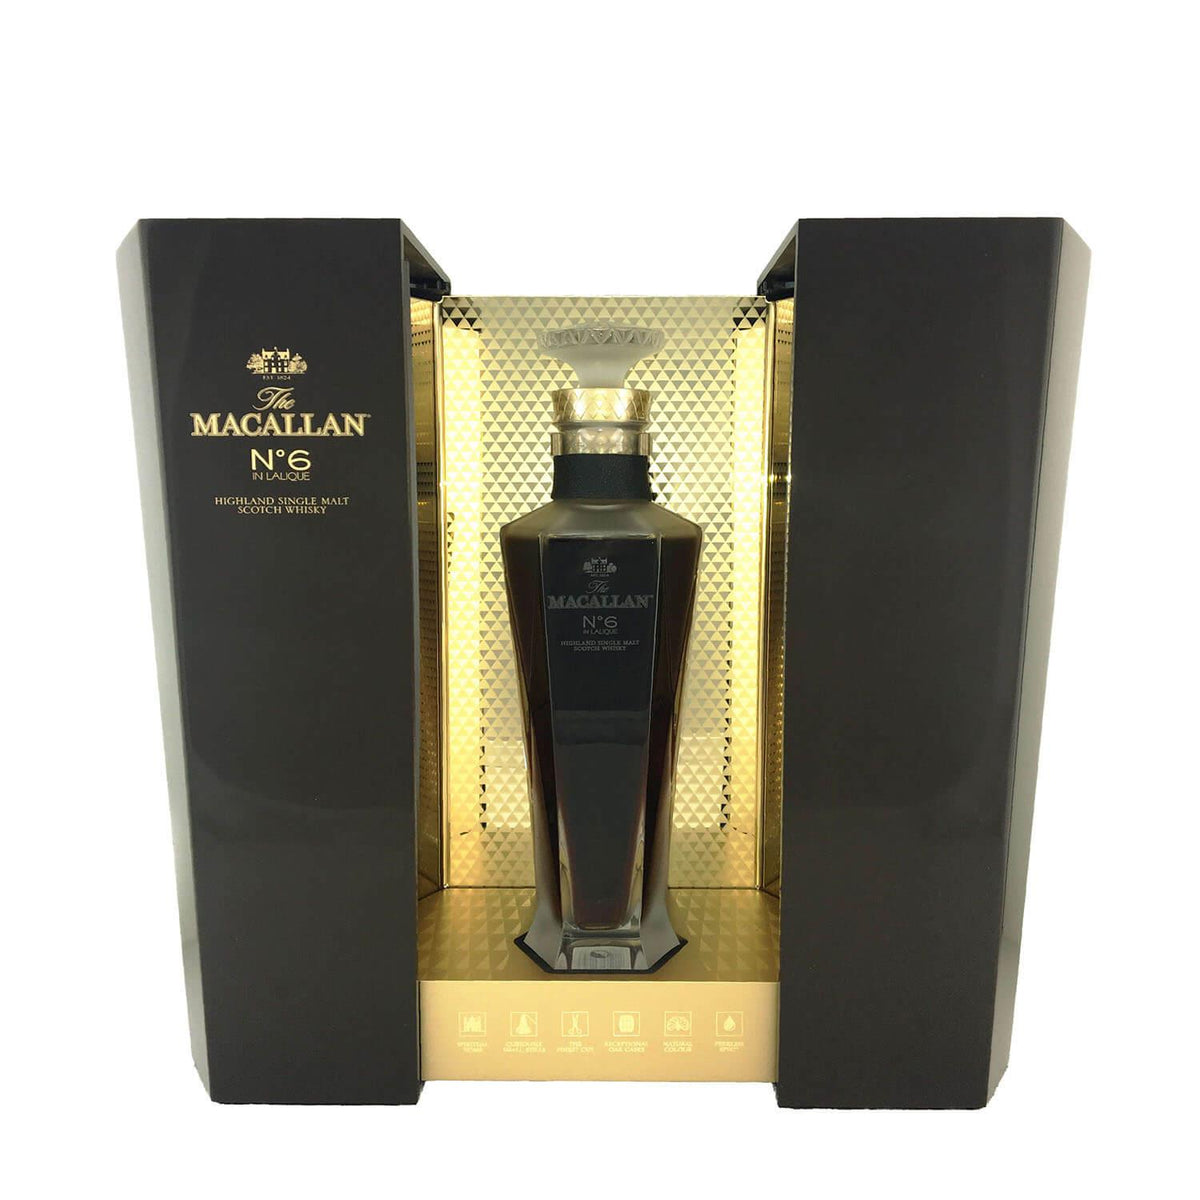 The Macallan No.6 Limited Edition Single Malt Scotch Whisky 700ml